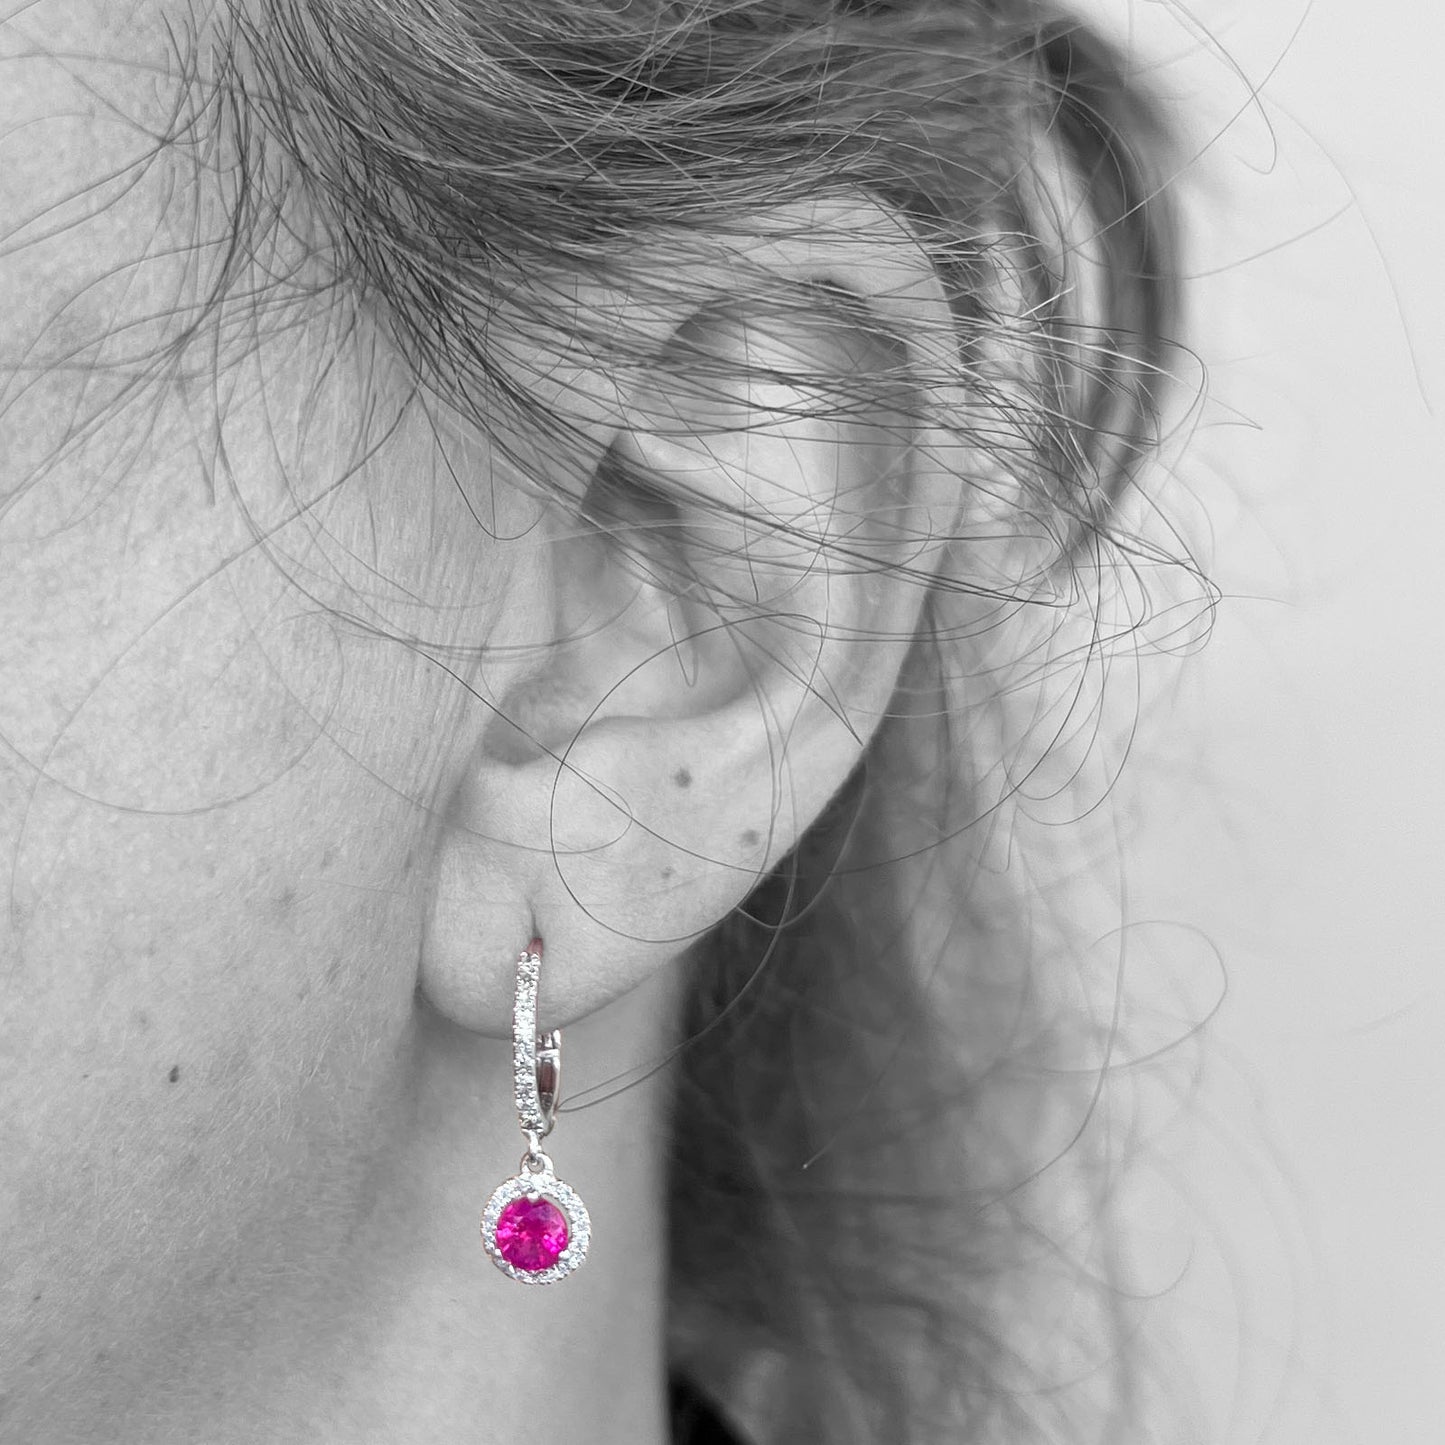 14kw Ruby and Diamond Earrings